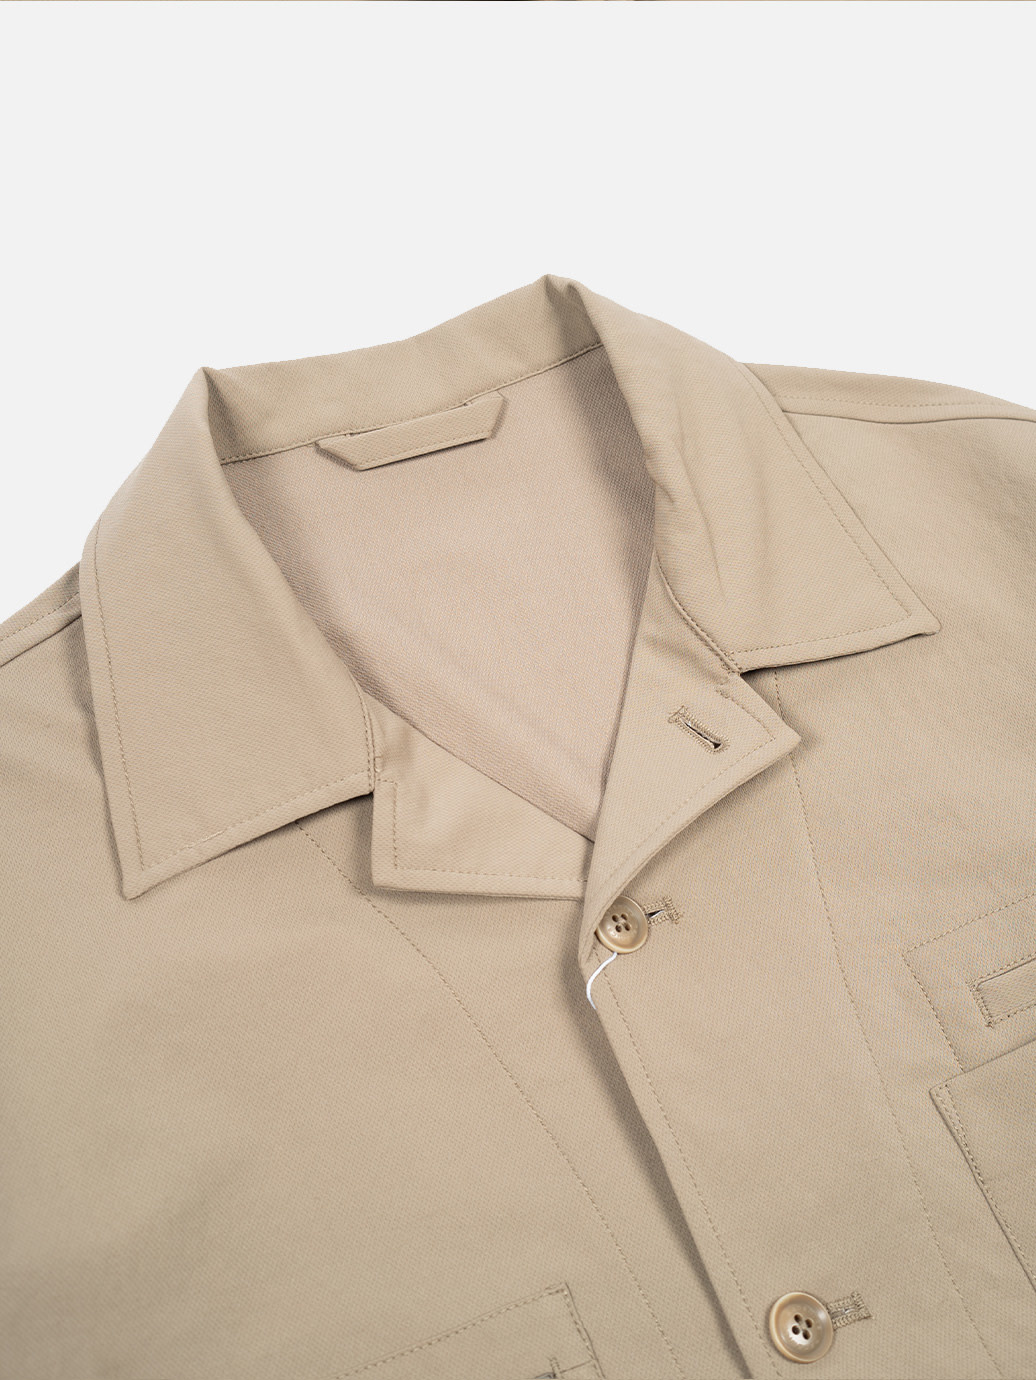 Nanamica ALPHADRY Shirt Jacket Taupe - OALLERY